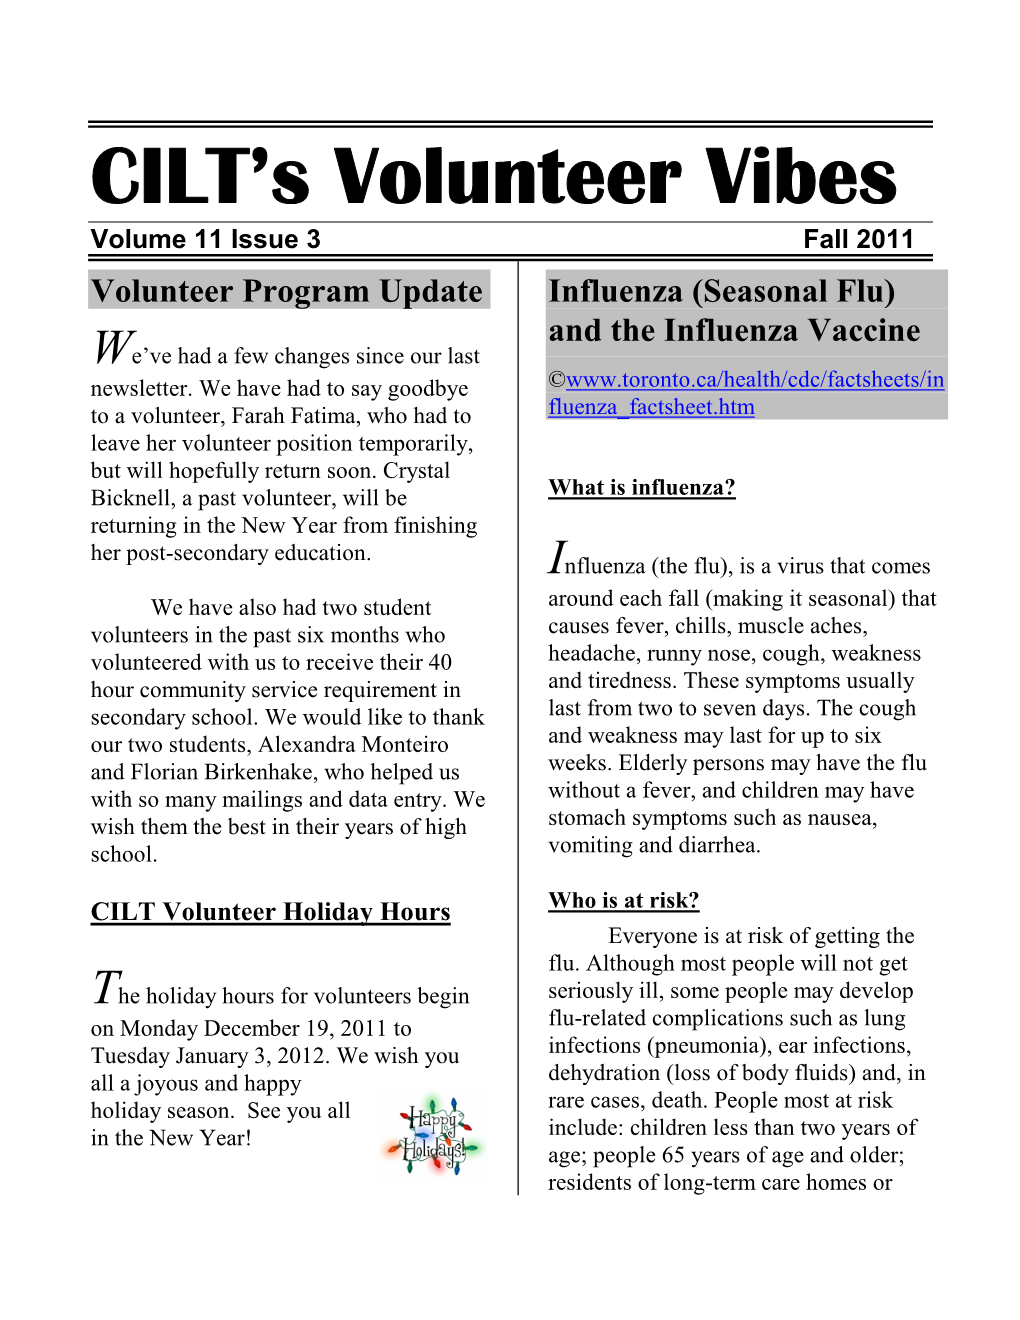 Volunteer Vibes Volume 11 Issue 3